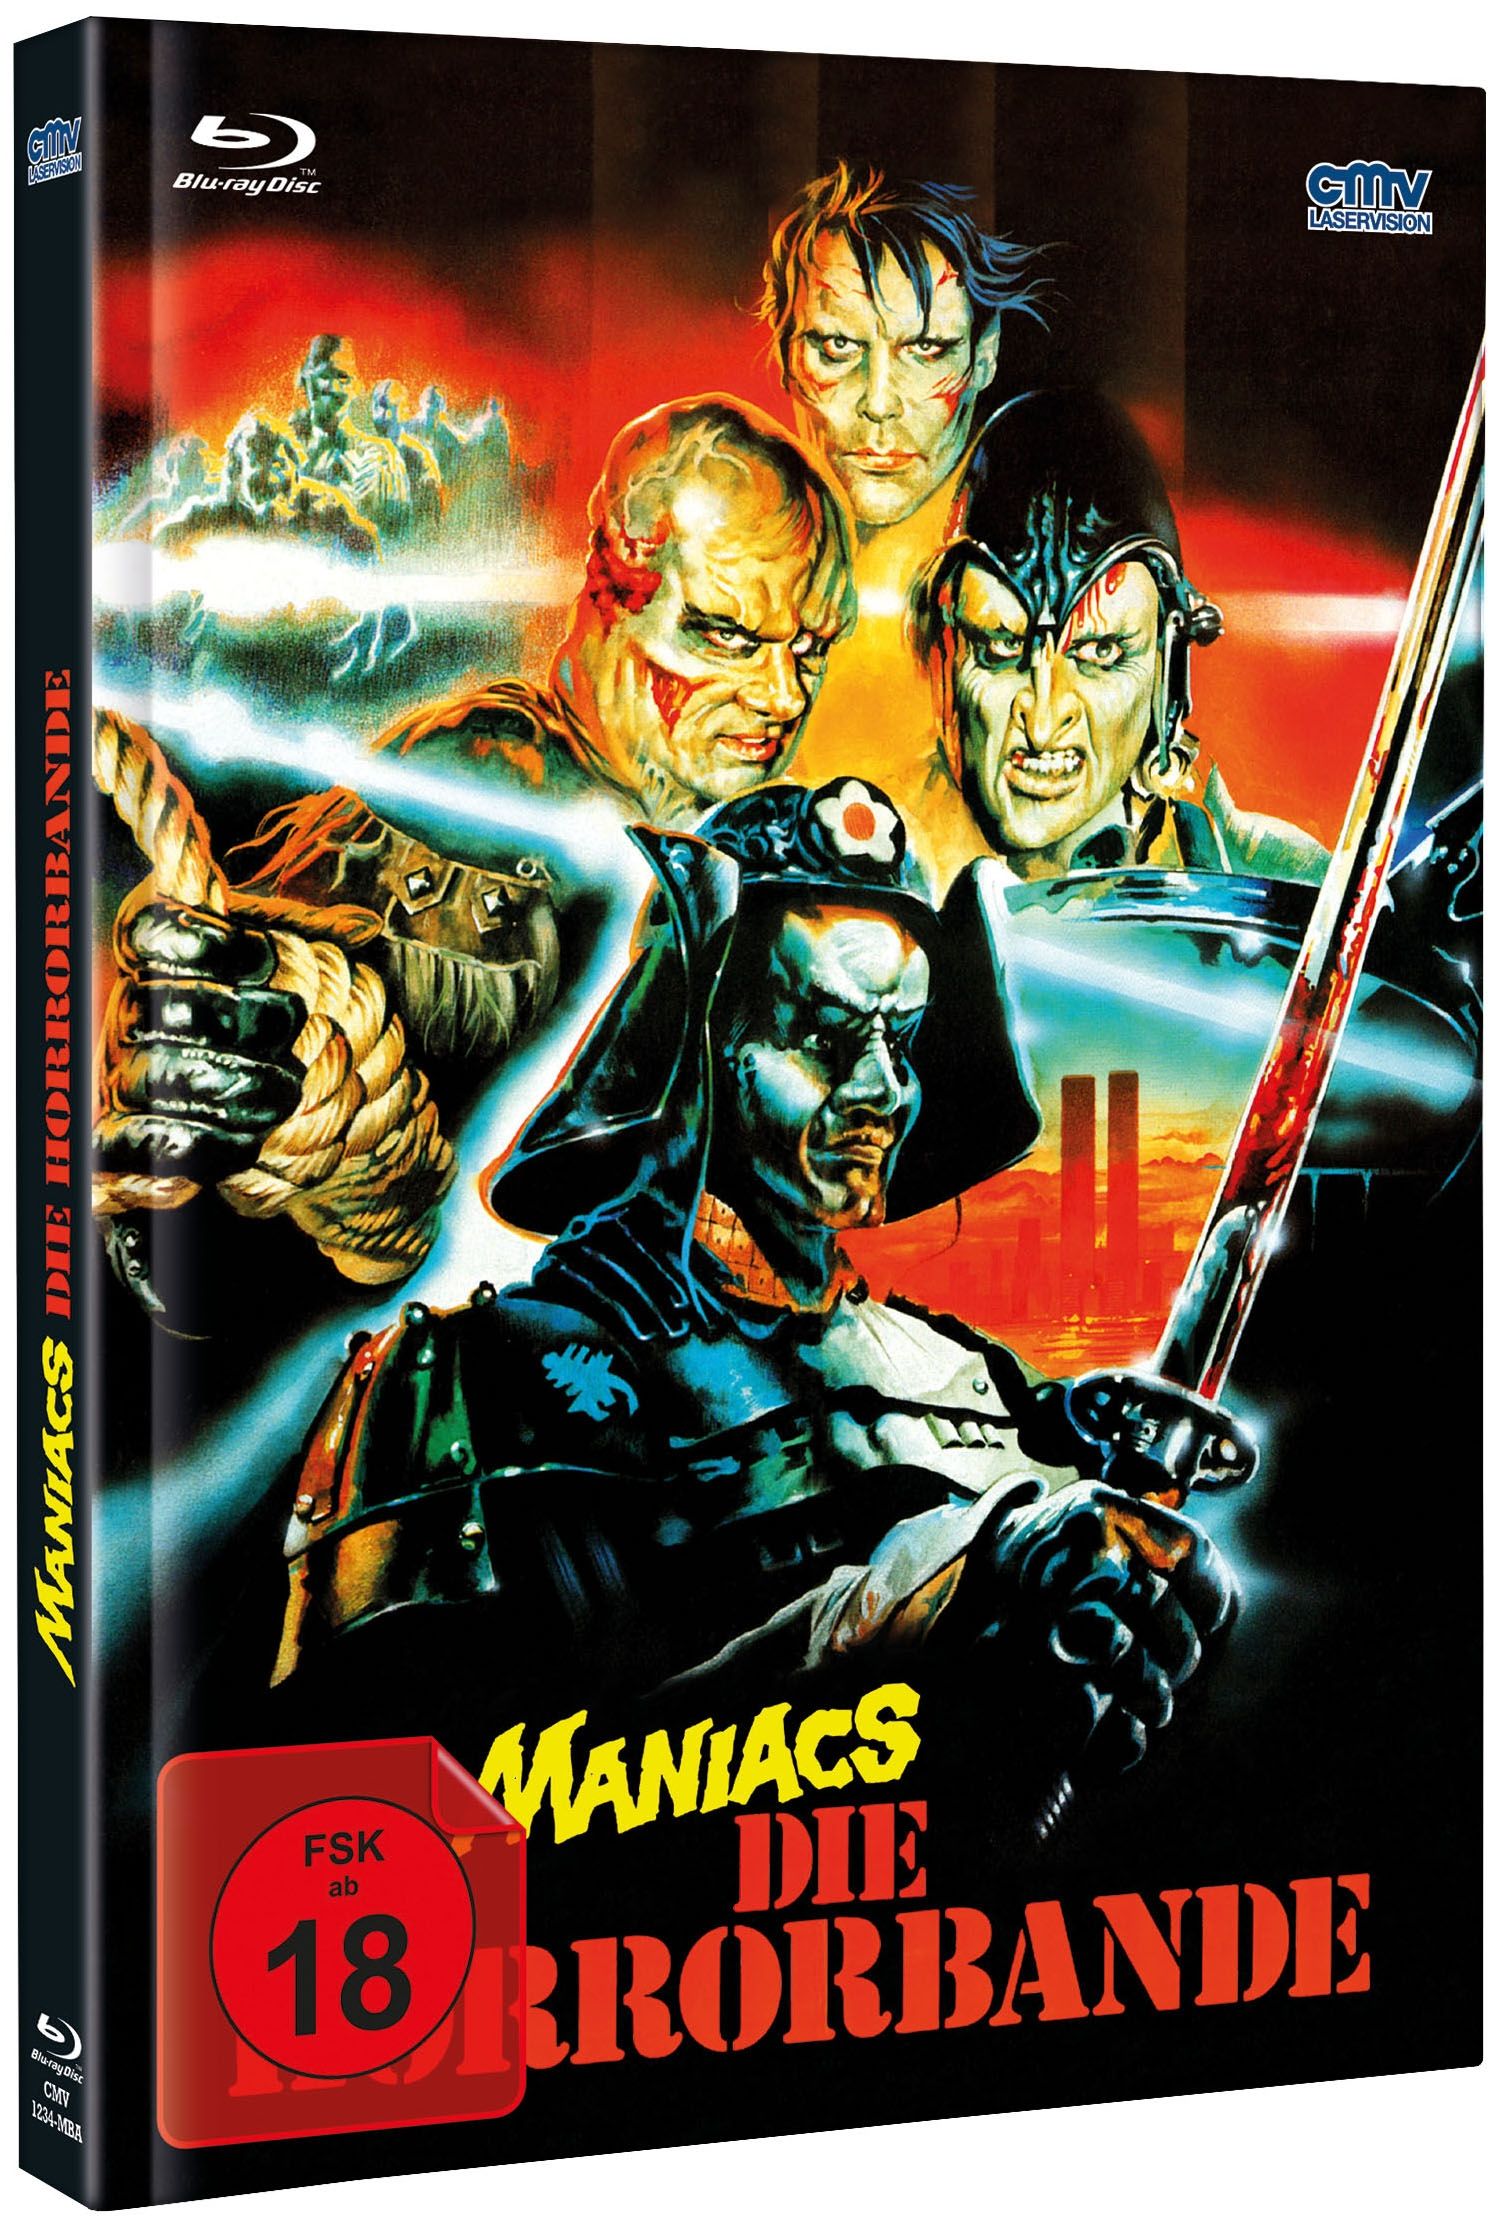 Neon Maniacs (Lim. Uncut Mediabook - Cover A) (DVD + BLURAY)